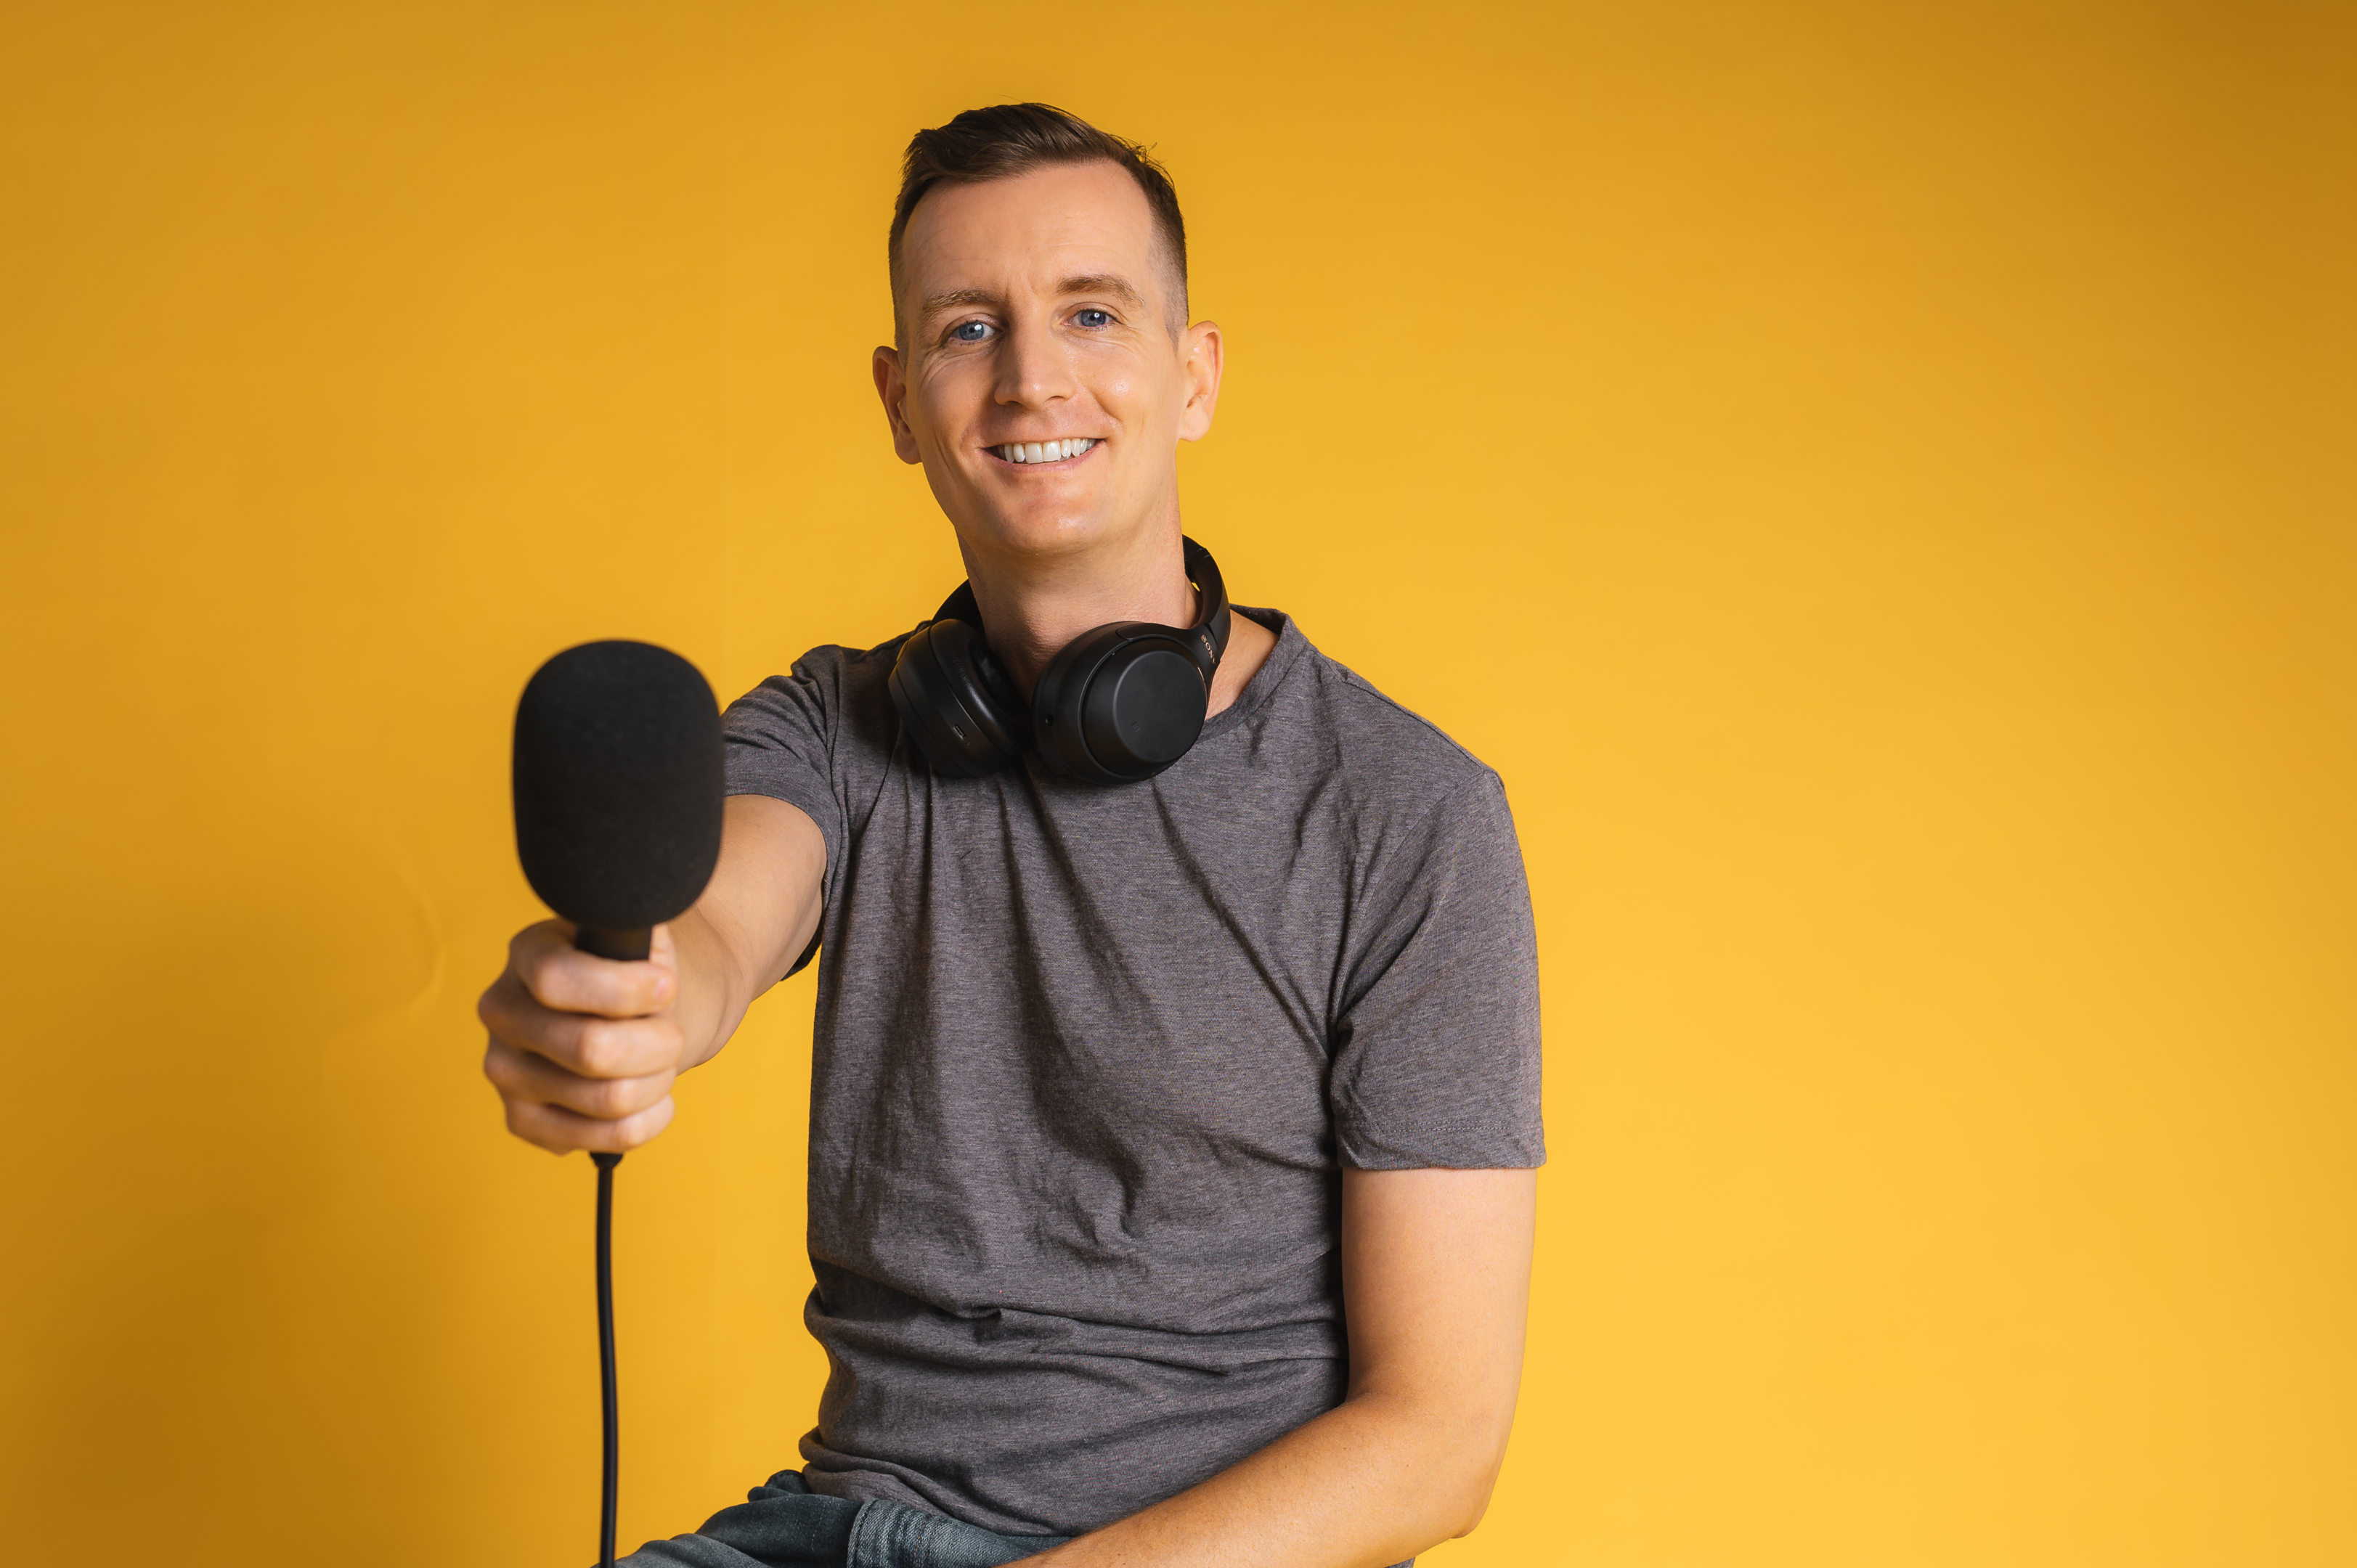 Podcast host Niall Mackay